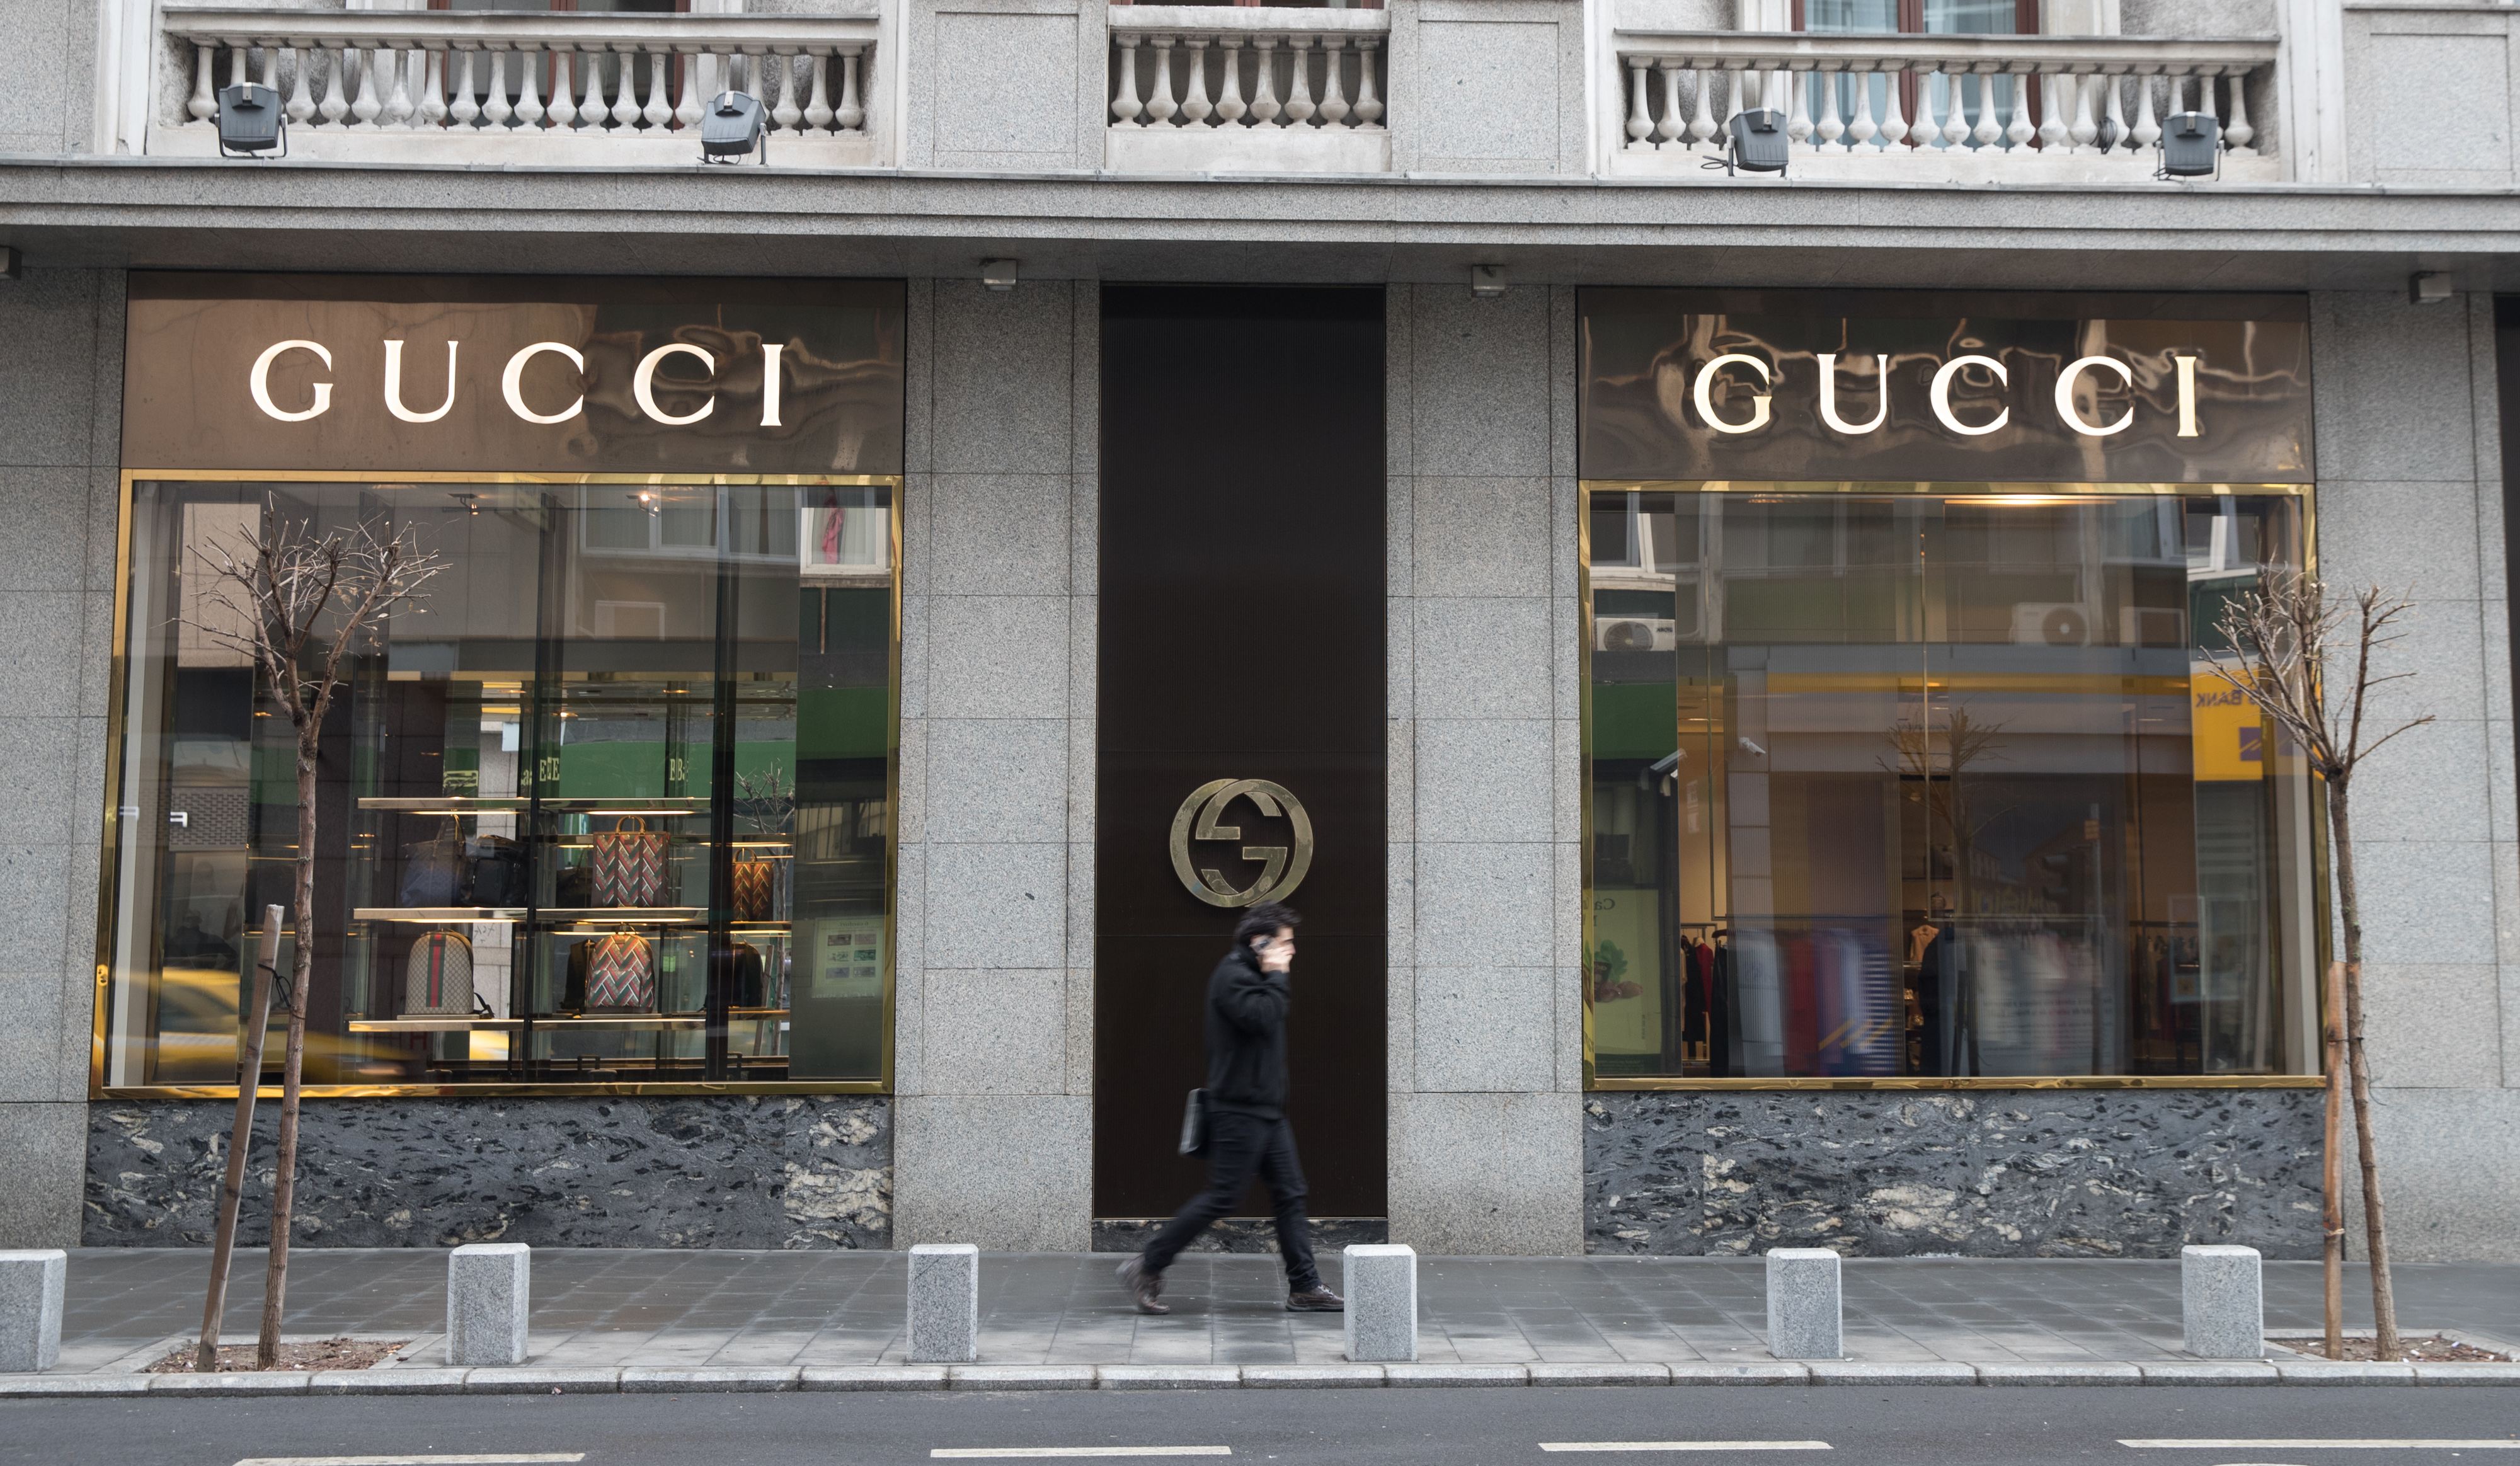 Floyd Mayweather shops at Gucci despite blackface boycott